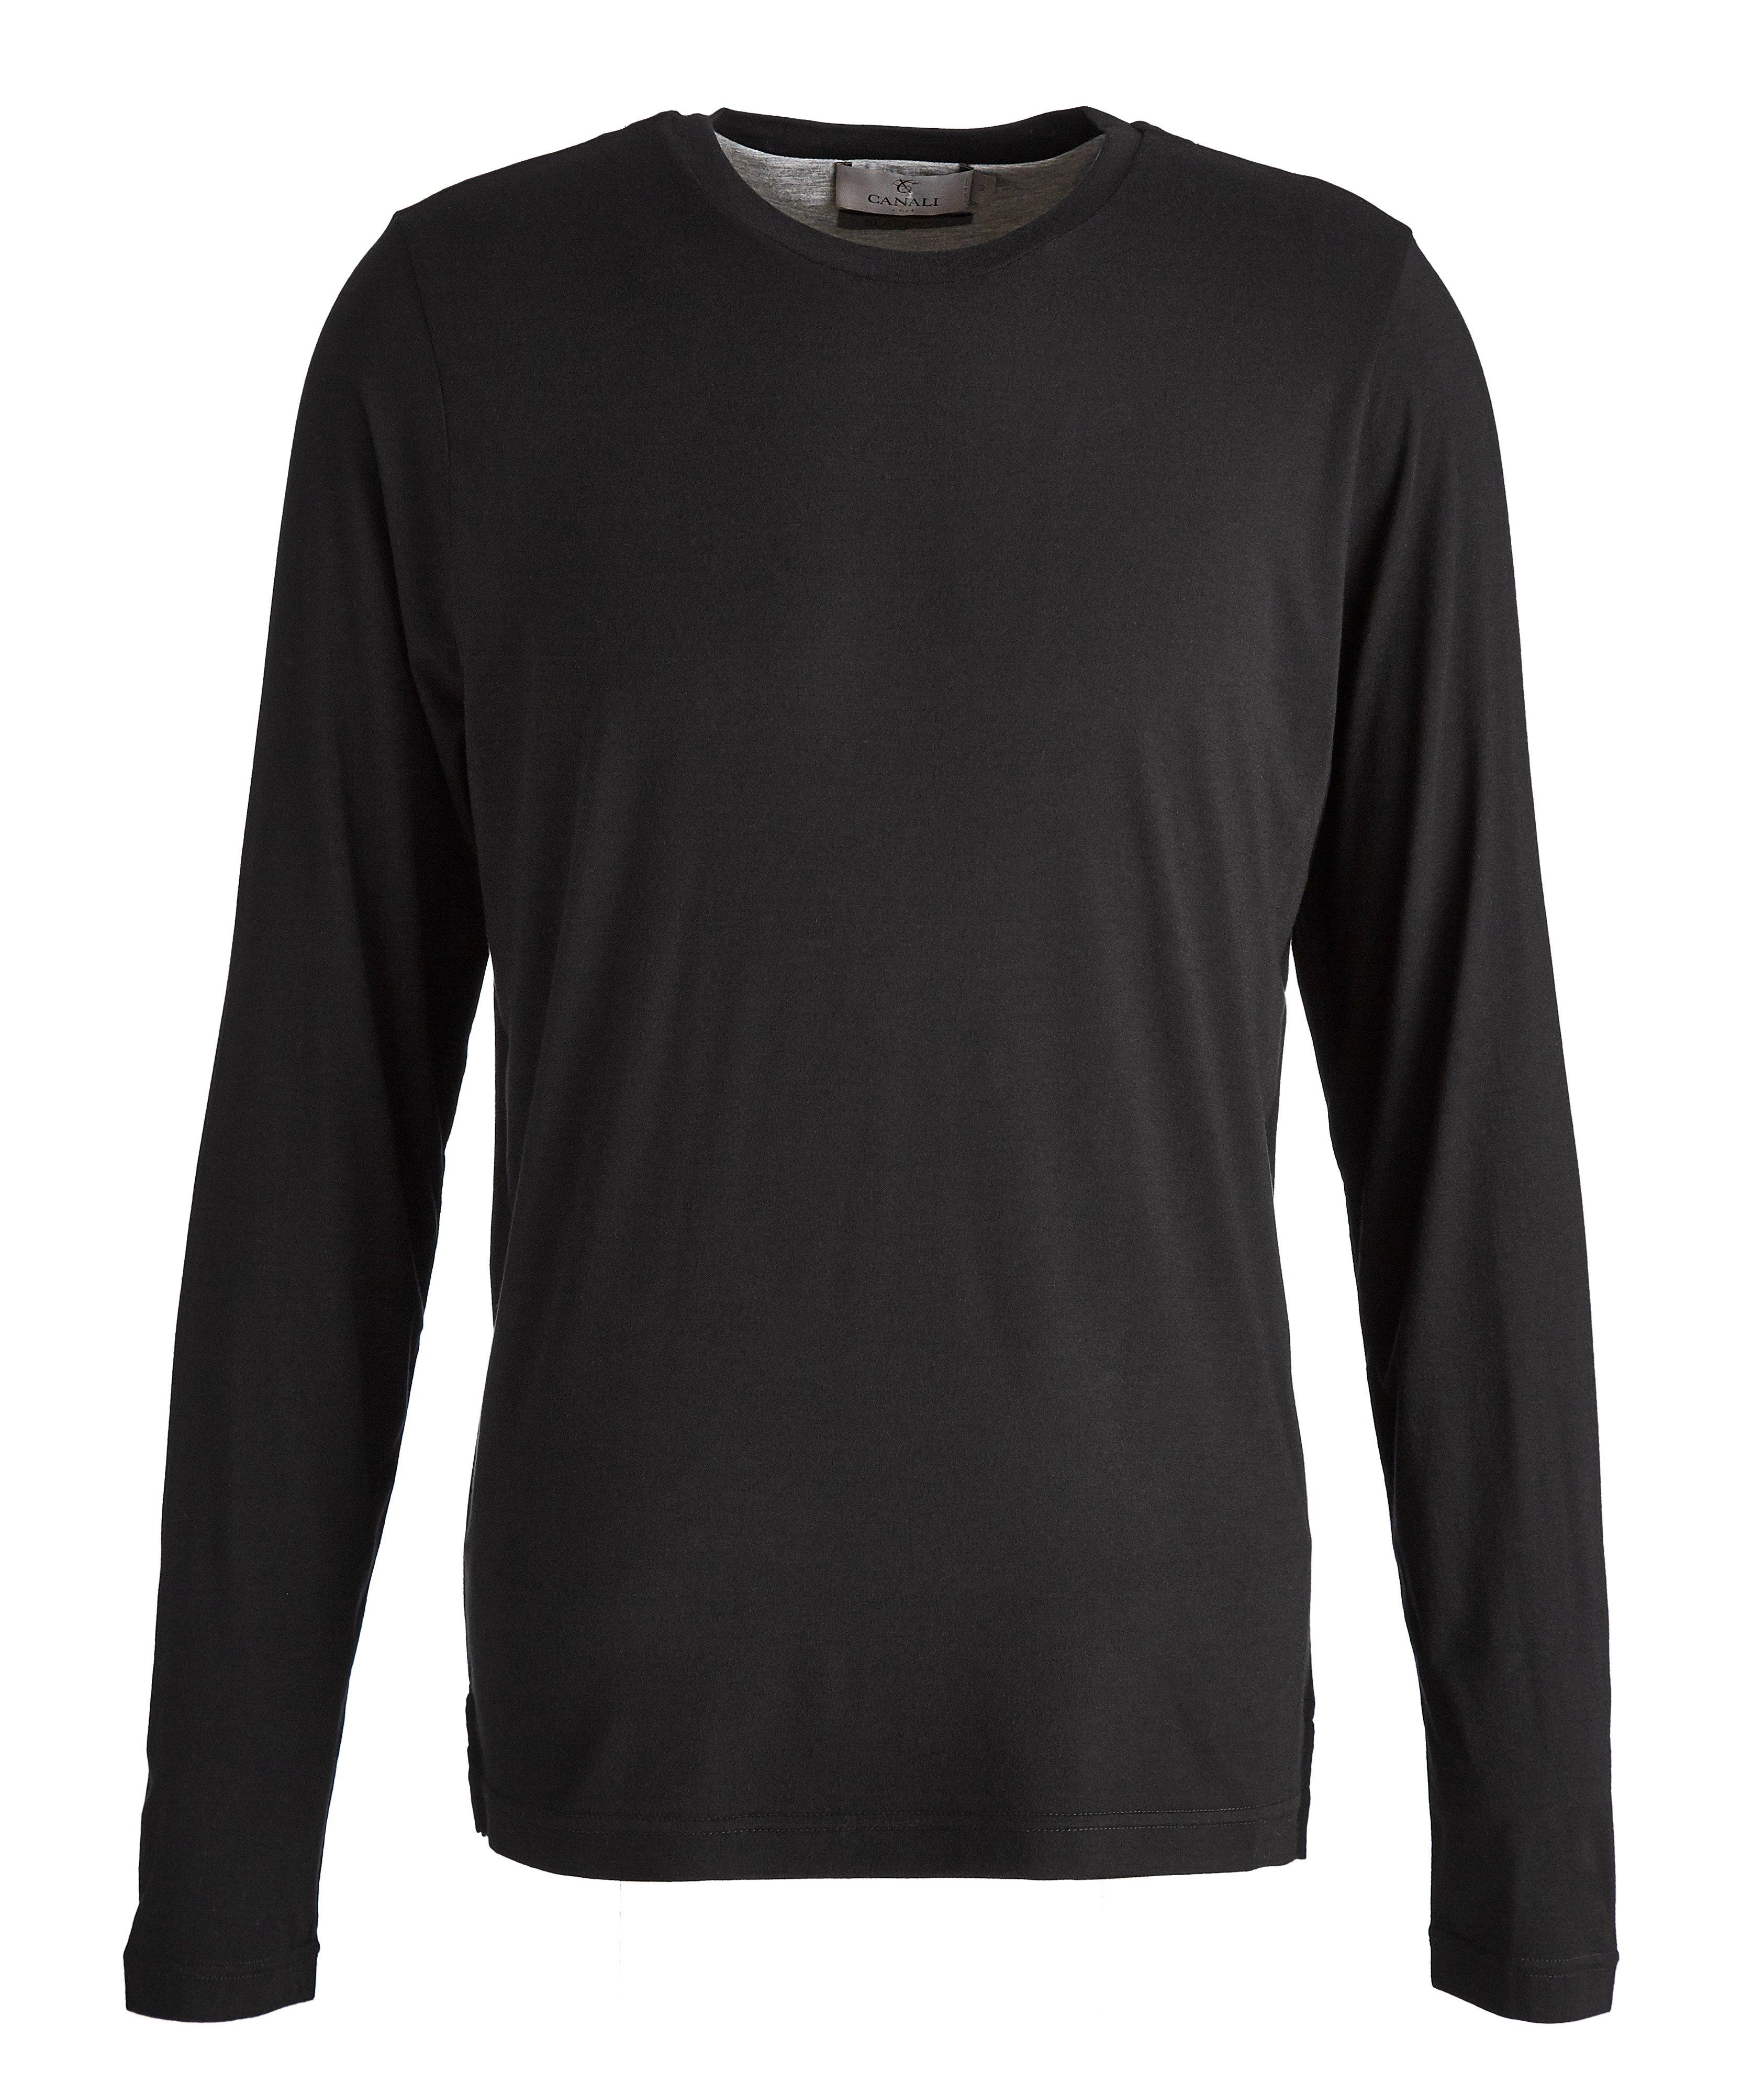 Long-Sleeve Modal-Blend T-Shirt image 0